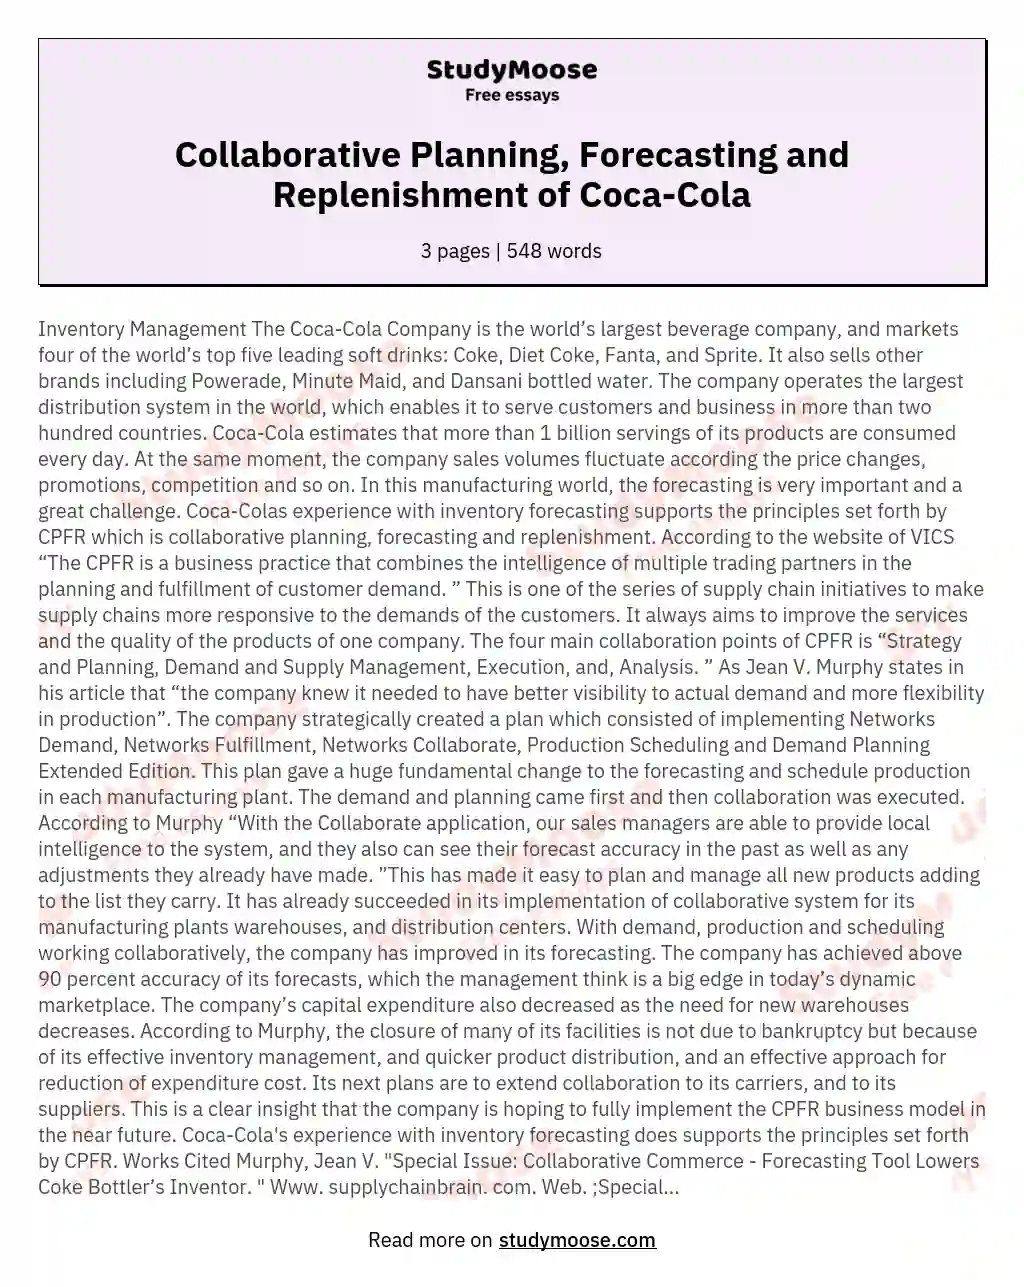 Collaborative Planning, Forecasting and Replenishment of Coca-Cola essay